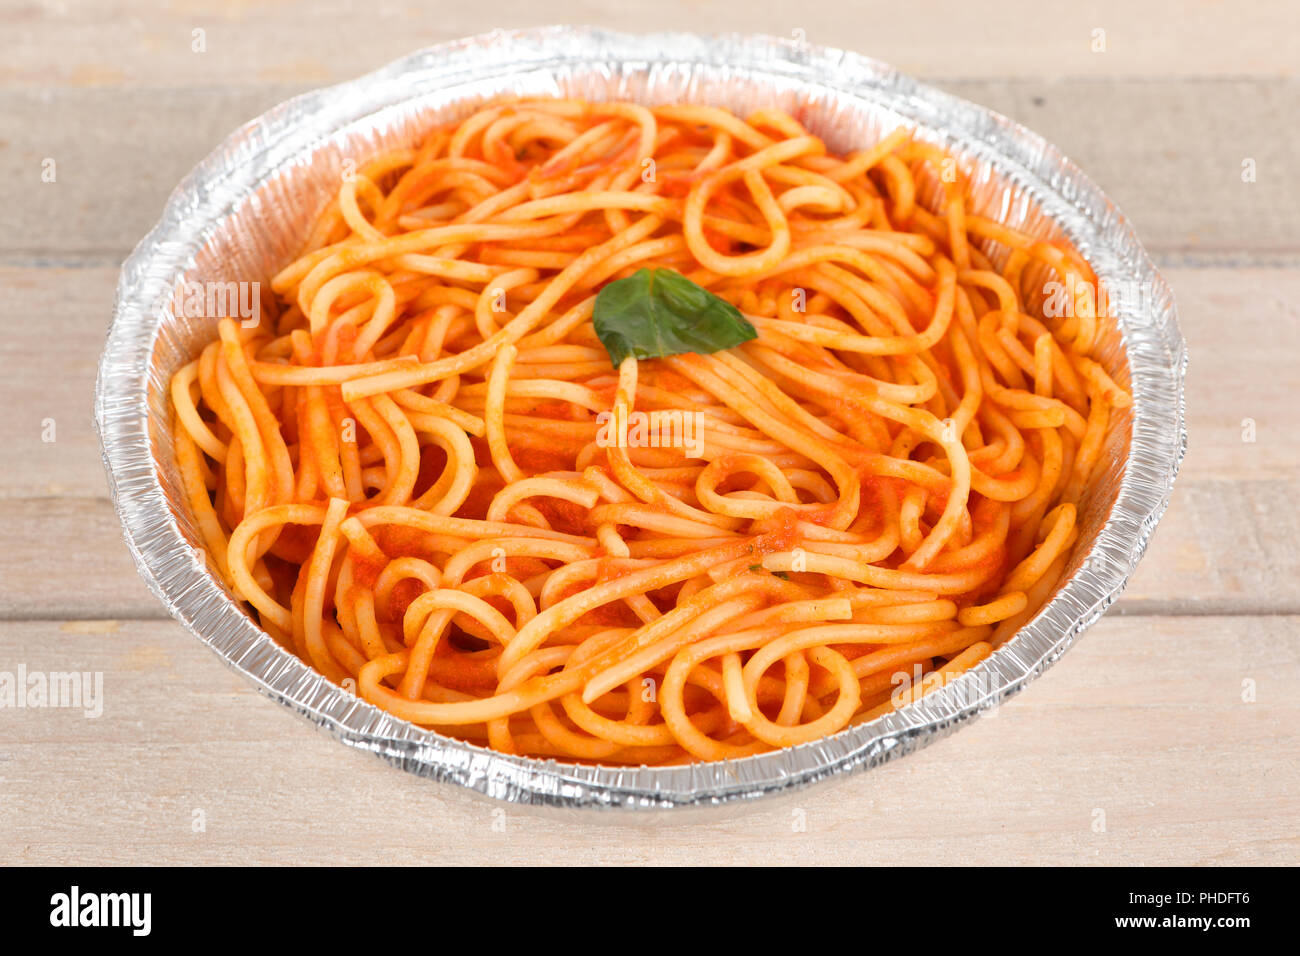 pasta with tomato sauce Stock Photo